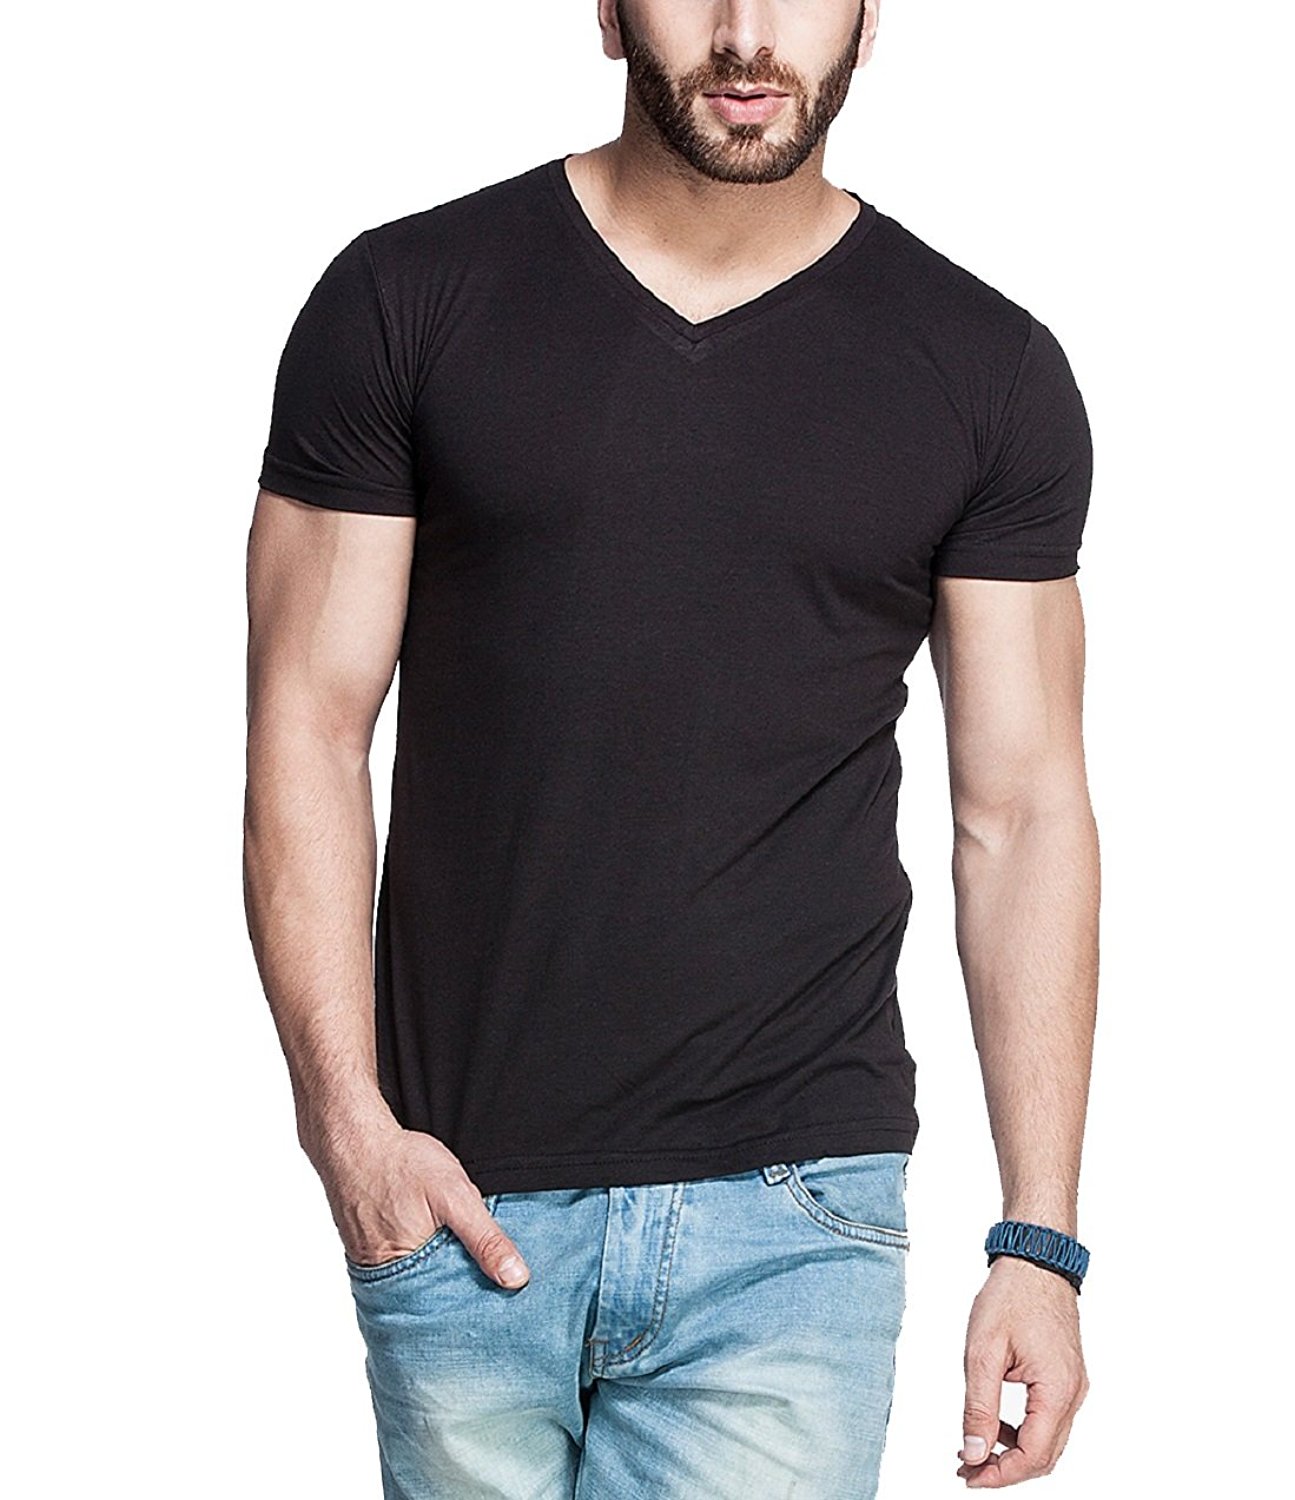 Buy Men's V-Neck Tshirt Black Online @ ₹799 from ShopClues